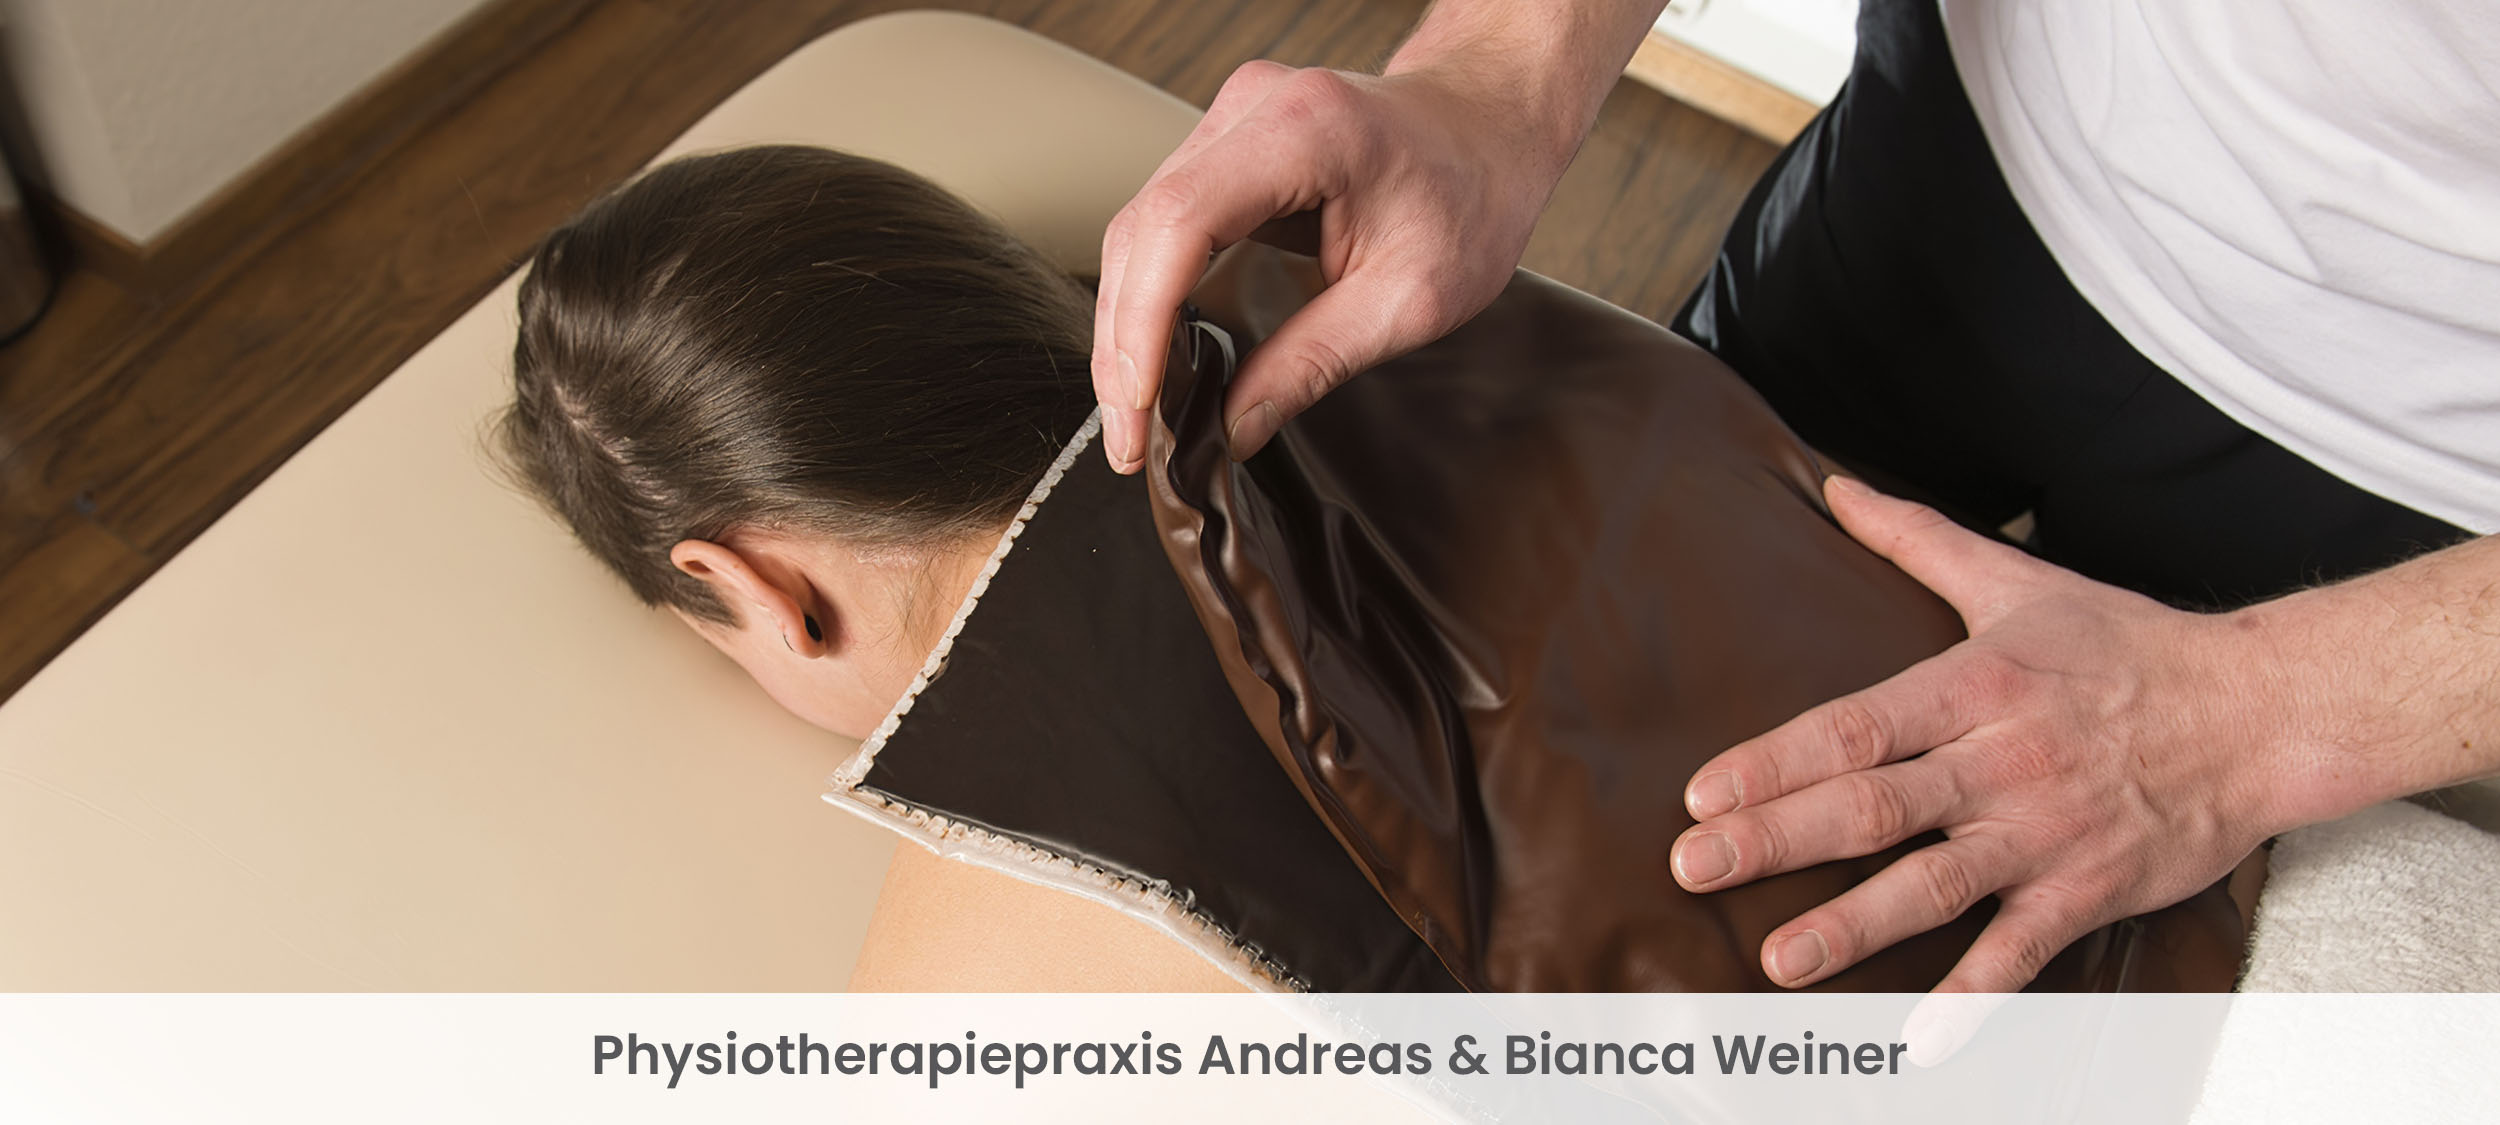 Physiotherapiepraxis Andreas & Bianca Weiner | Header 5